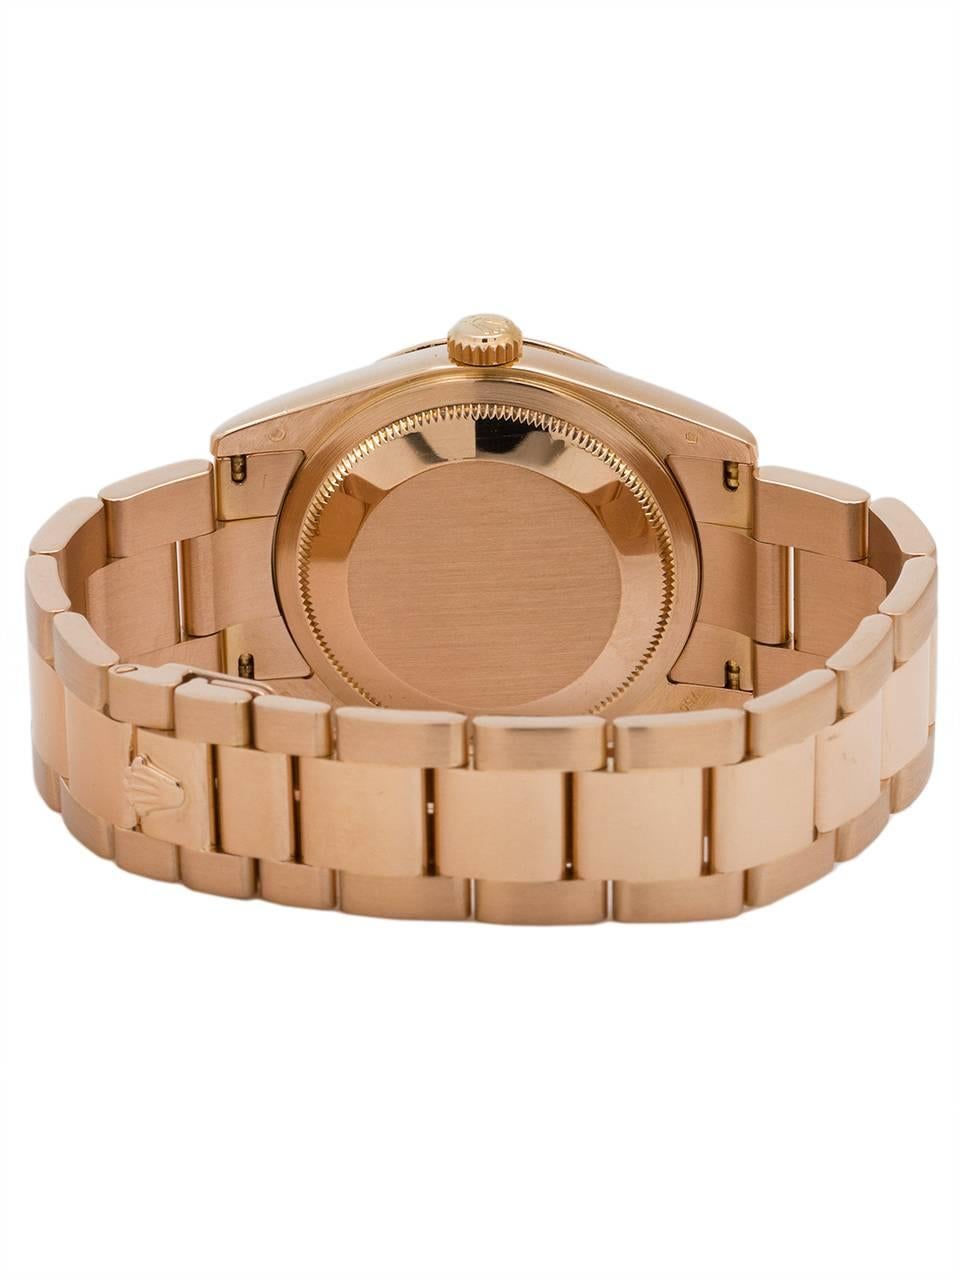 Men's Rolex Pink Gold Oyster President Day Date Wristwatch Ref 118235, circa 2002